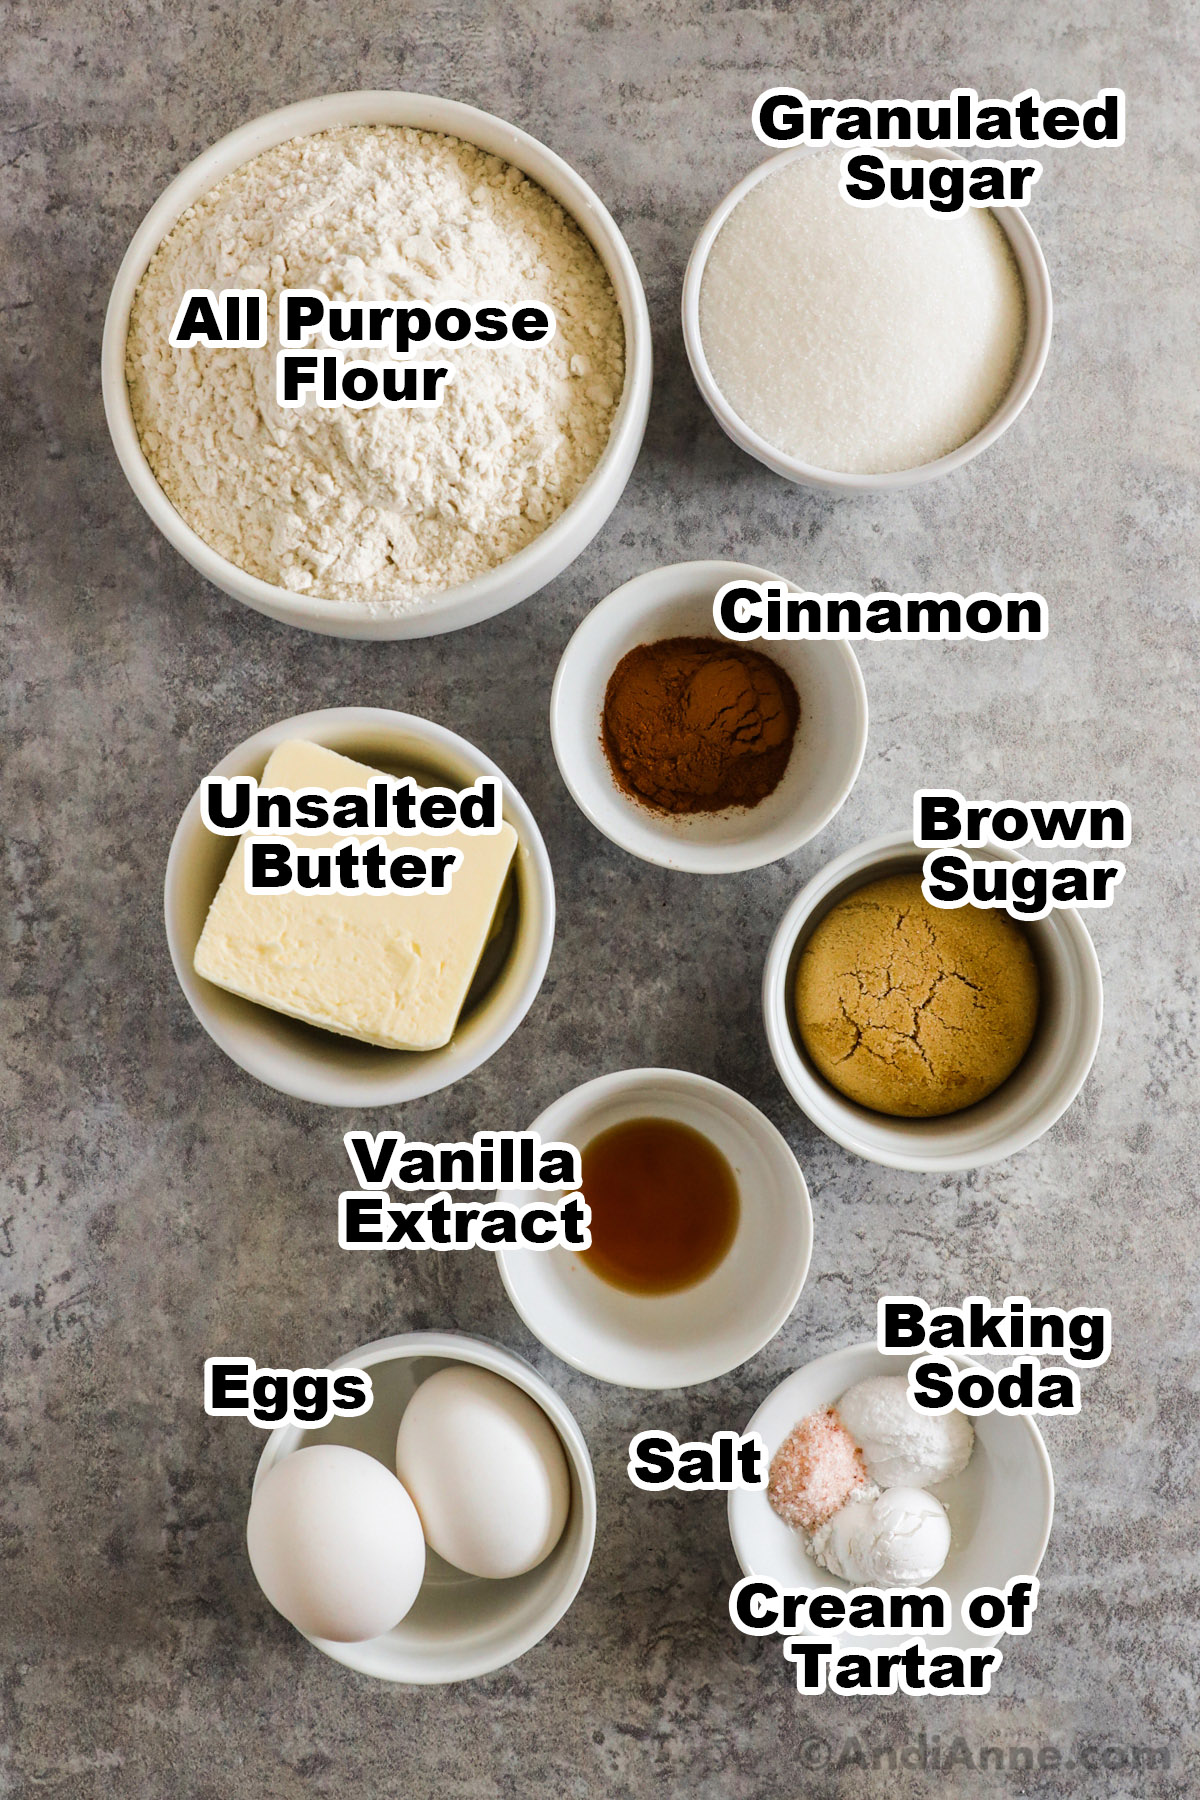 Recipe ingredients on the counter including bowls of flour, sugar, butter, cinnamon, brown sugar, vanilla, eggs, baking soda, salt and cream of tartar.